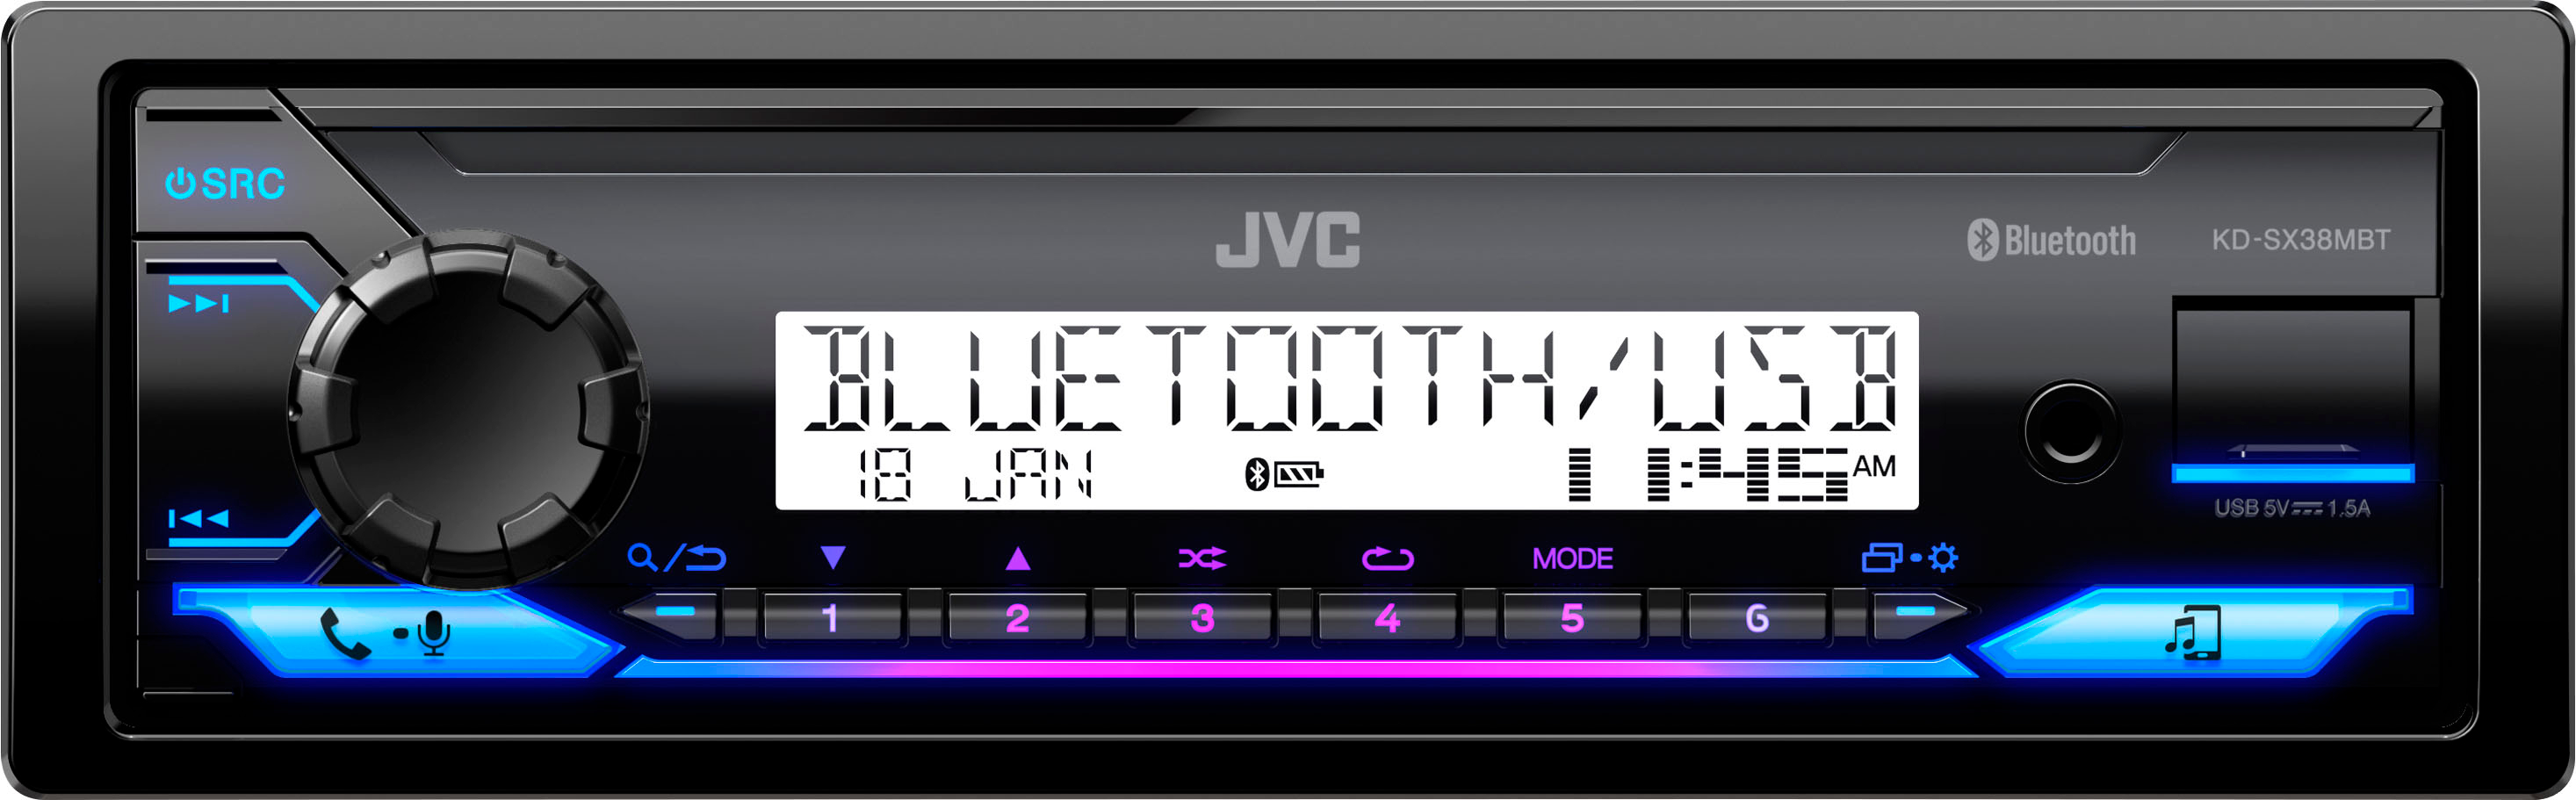 JVC Bluetooth Digital Media Receiver - Black - 1 Each